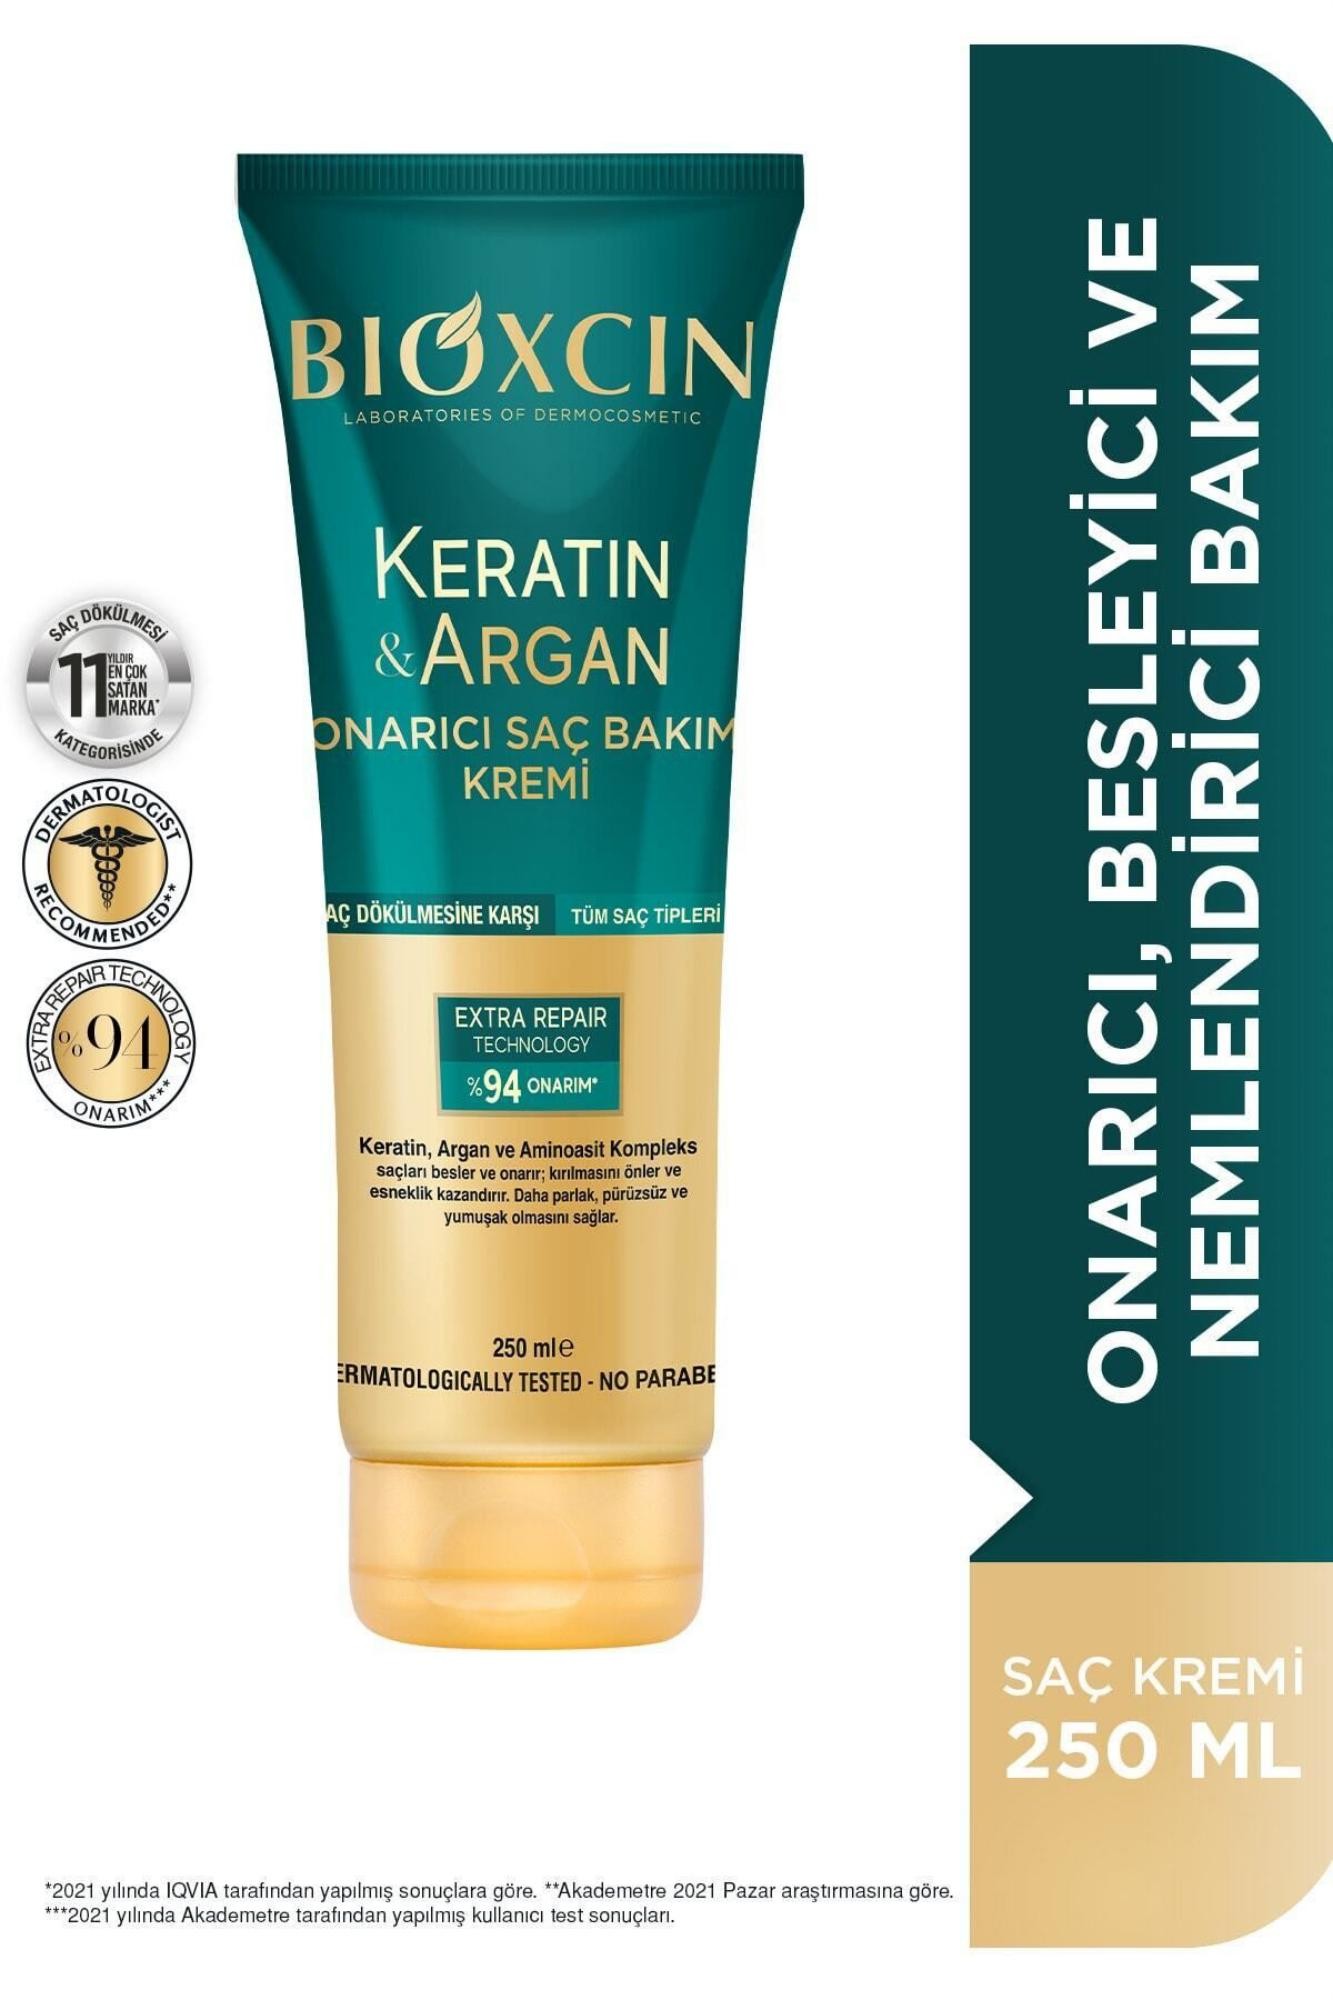 Bioxcin Keratin Argan Repair Hair Care Cream 250 Ml for Damaged and Damaged Hair